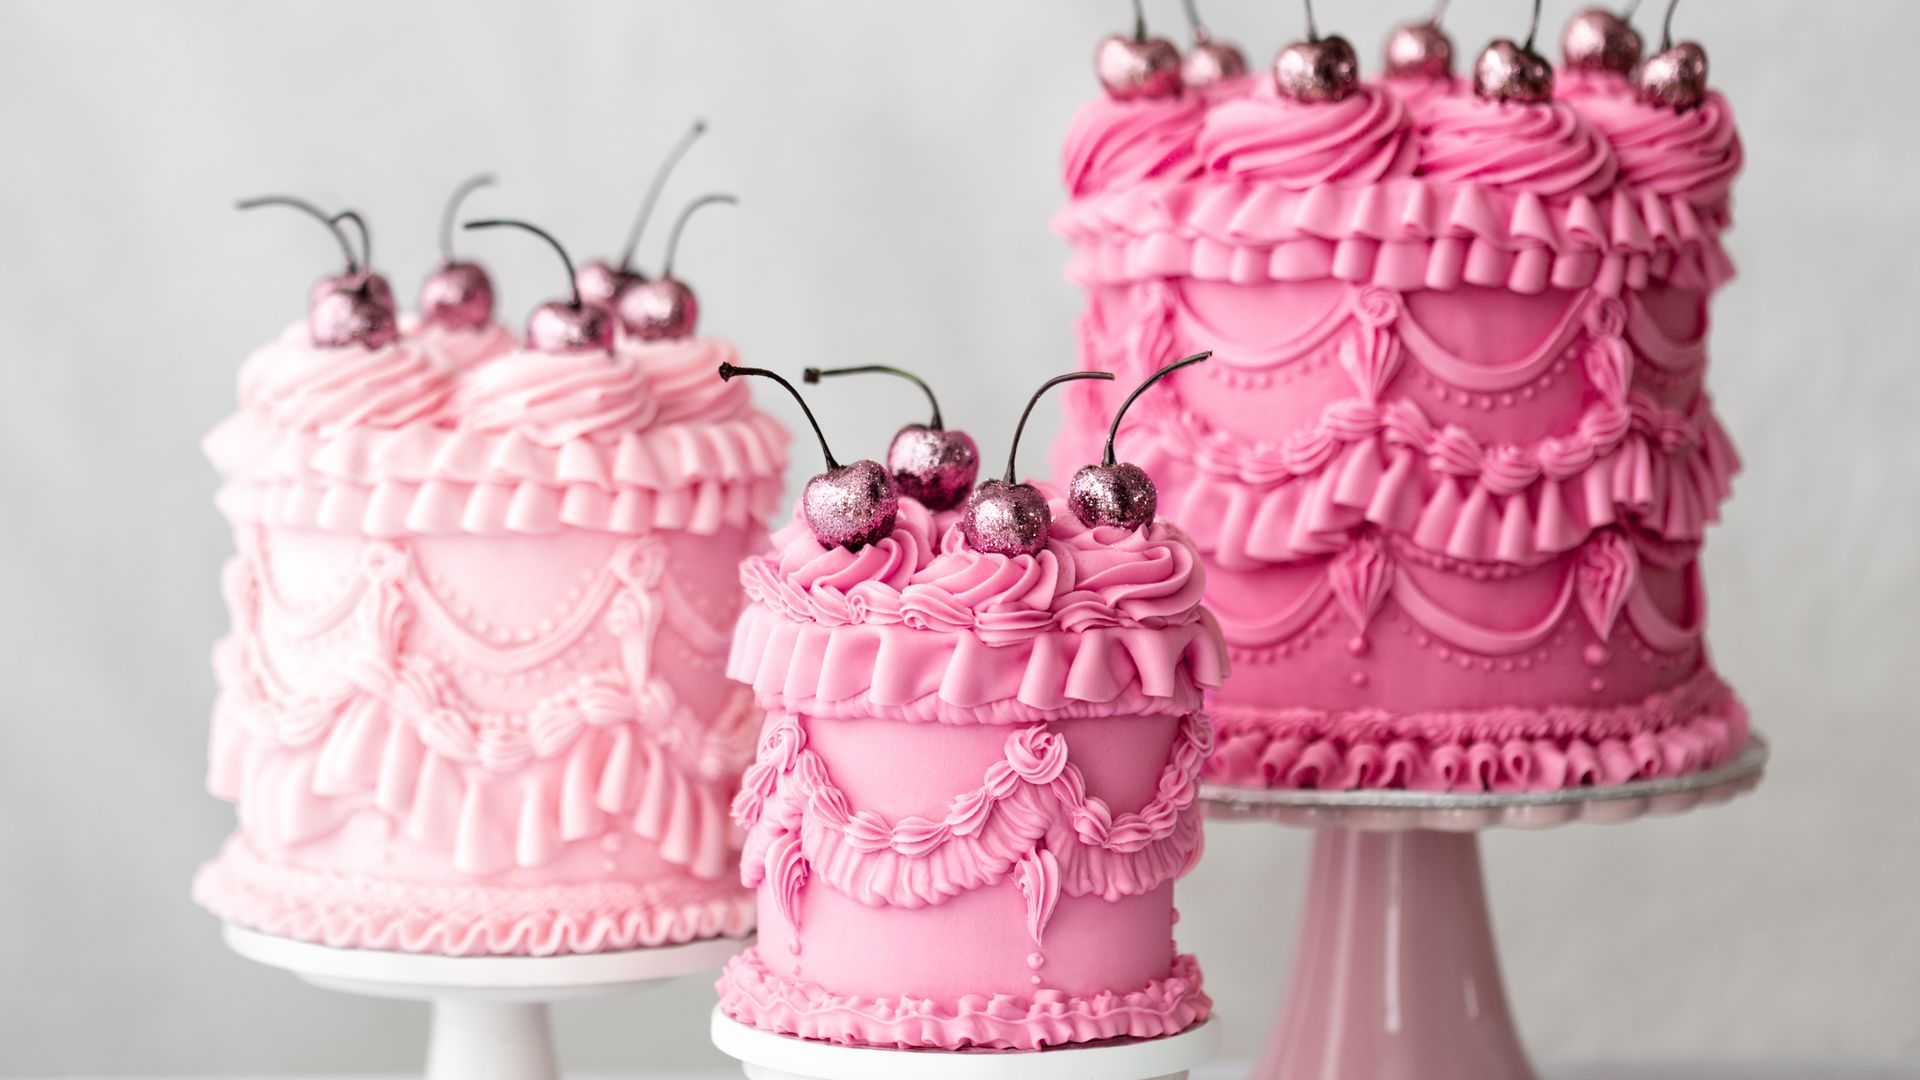 Three pink vintage style celebration cakes